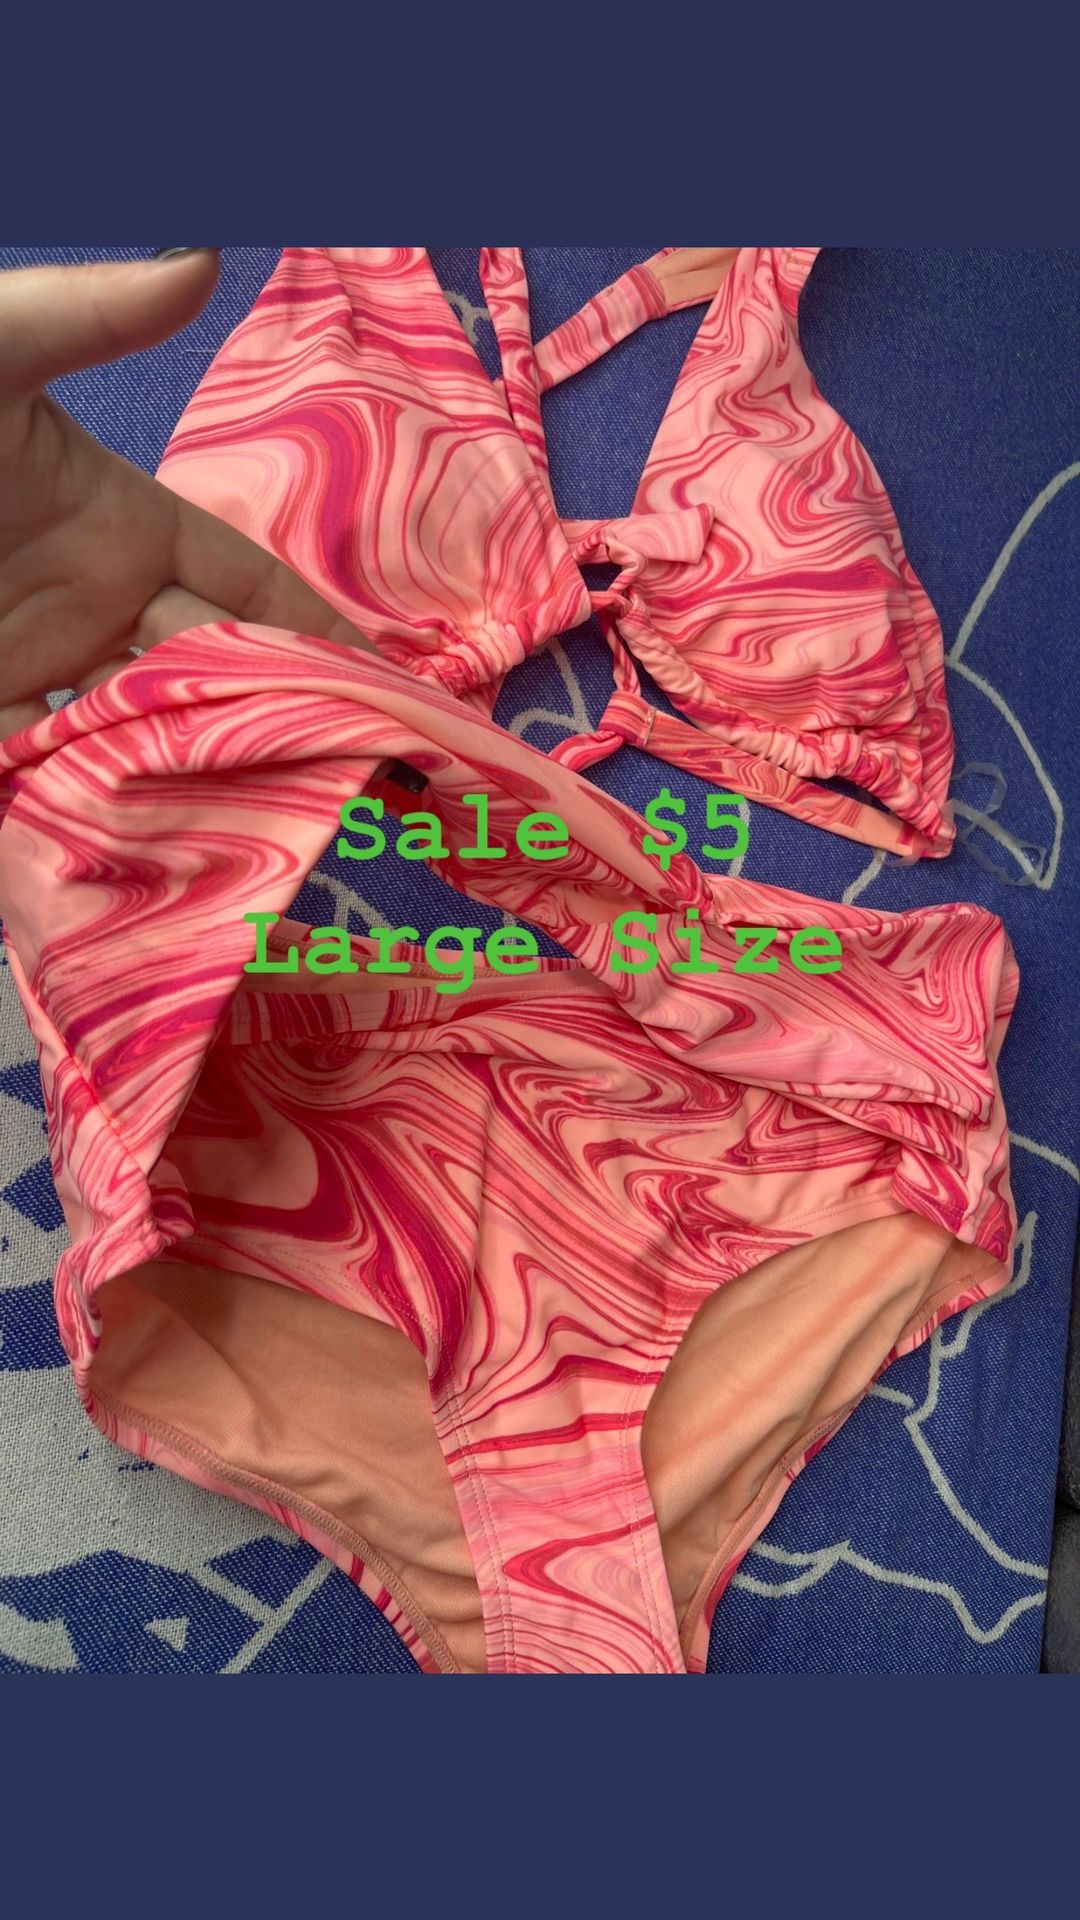 Set 2 Pieces Swimwear Pink Size Large Bra With Cups And Bikini Covers Tummy Set 